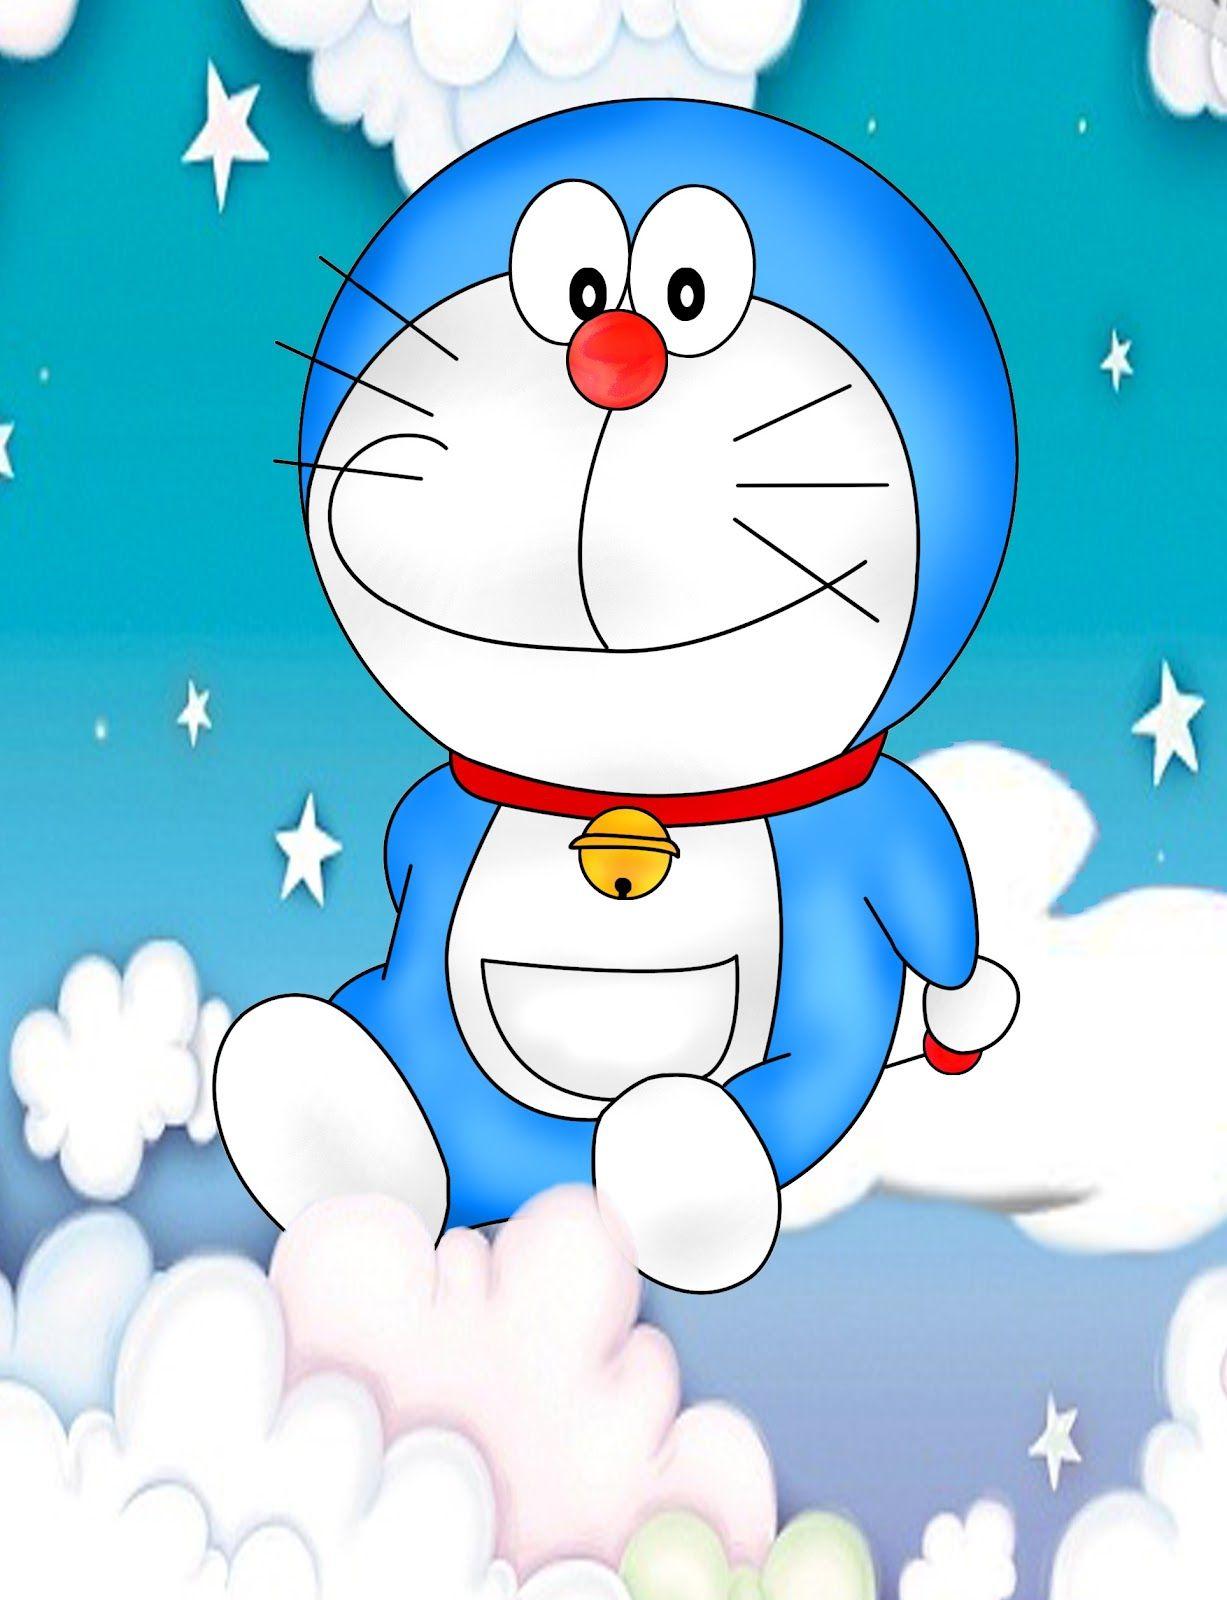 Doraemon Wallpapers for iPhone